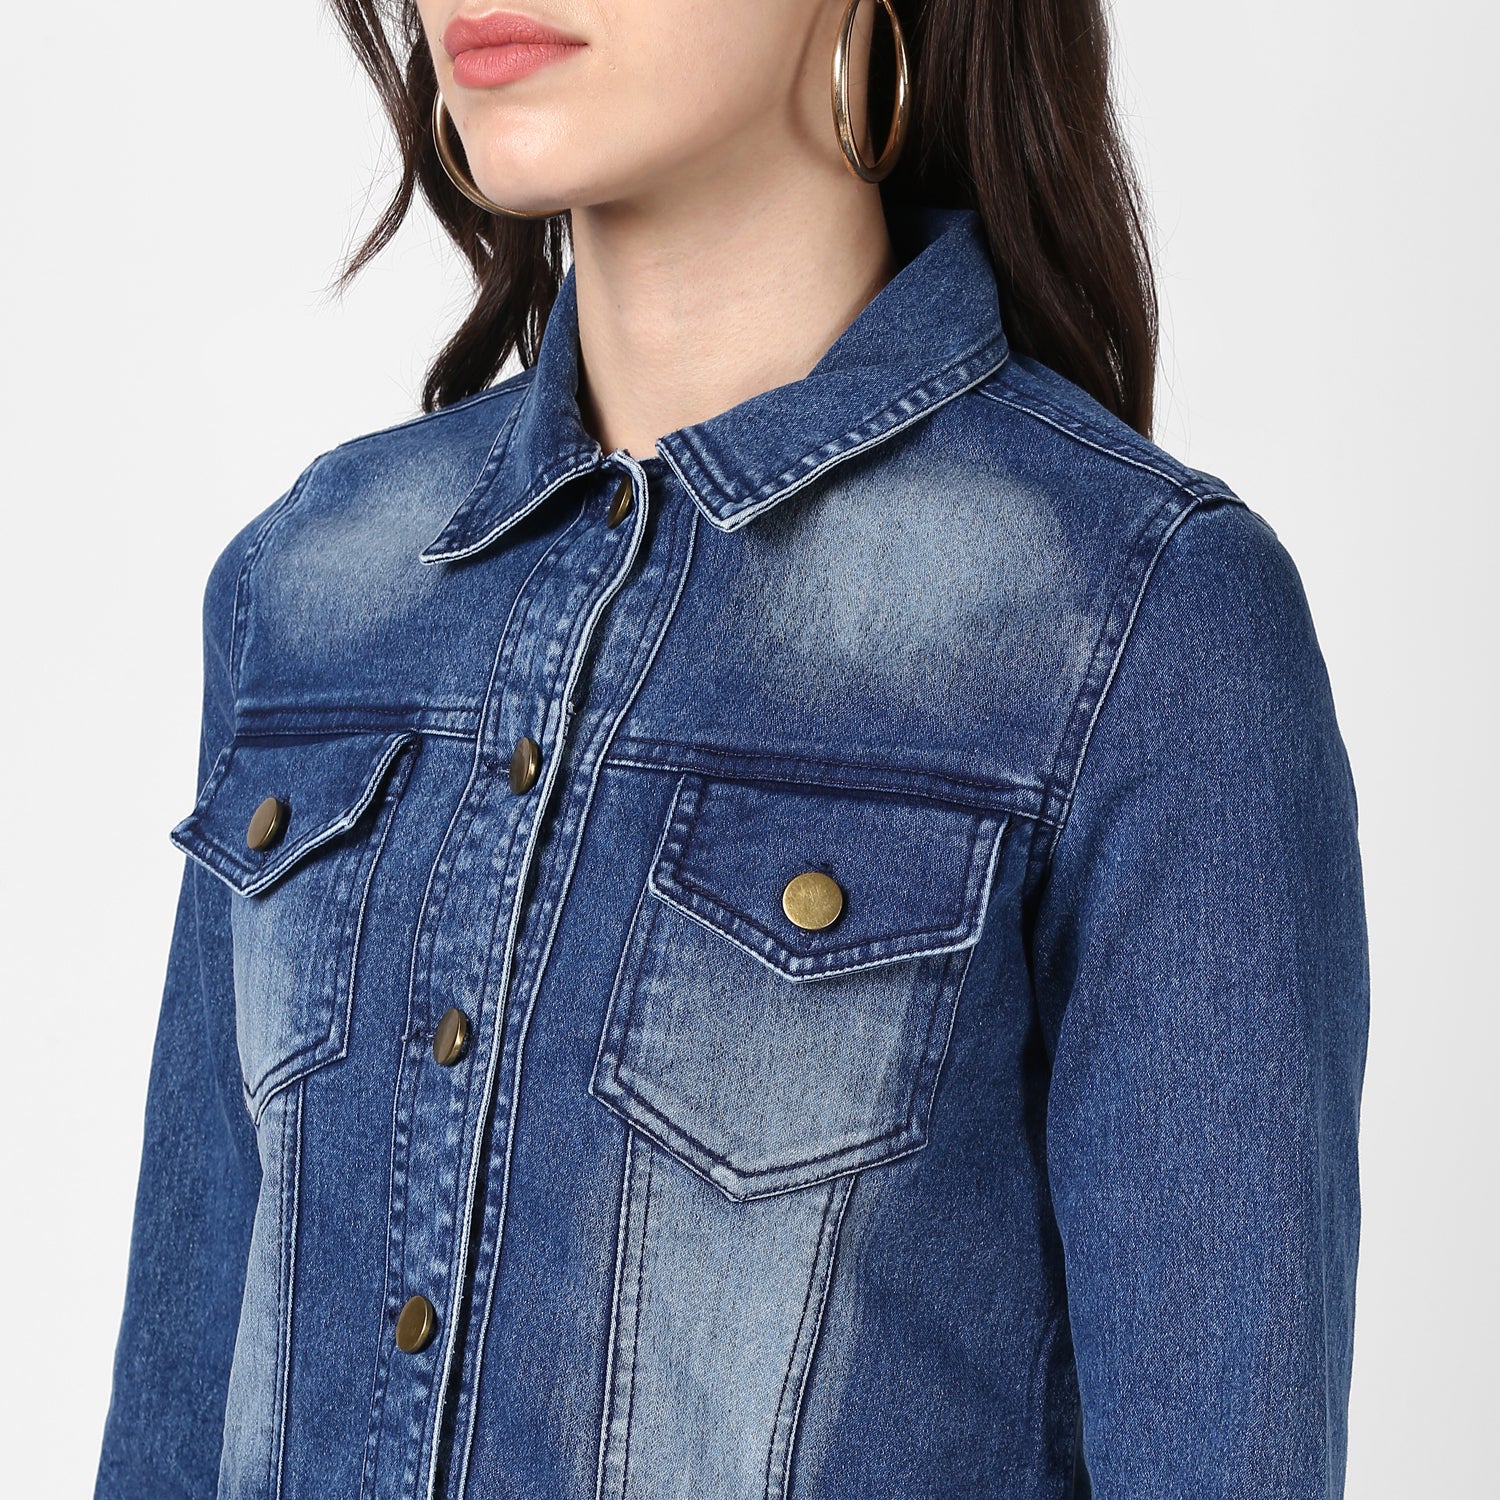 Women's Blue Denim Jacket with Washed effect - StyleStone